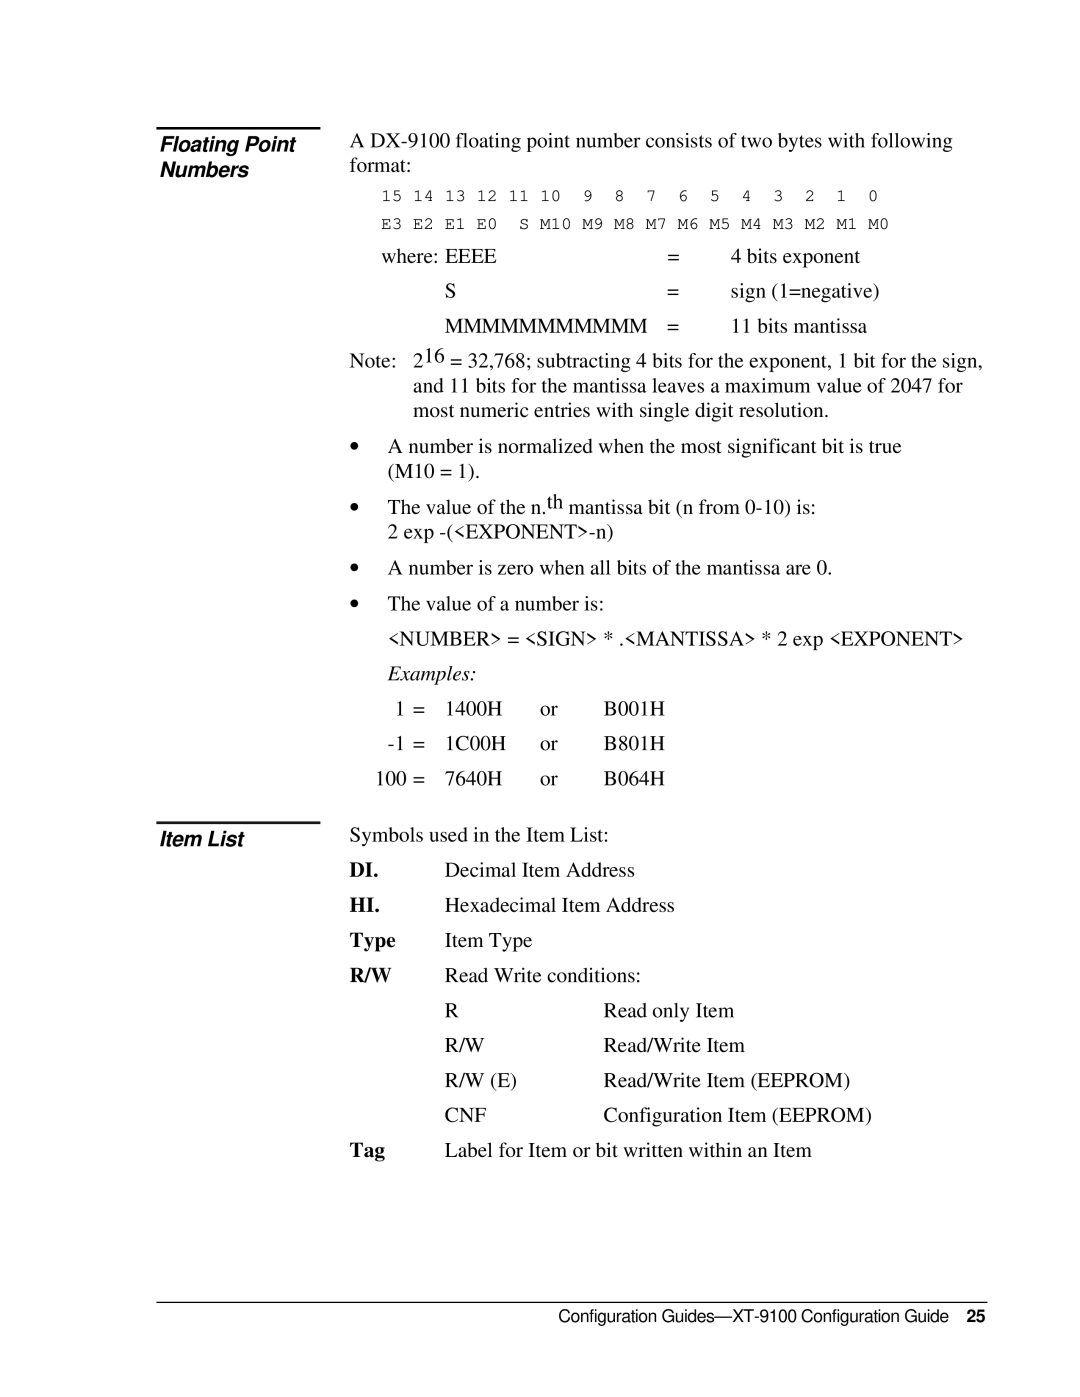 Johnson Controls XT-9100, XP-910x appendix Floating Point Numbers Item List, Examples 